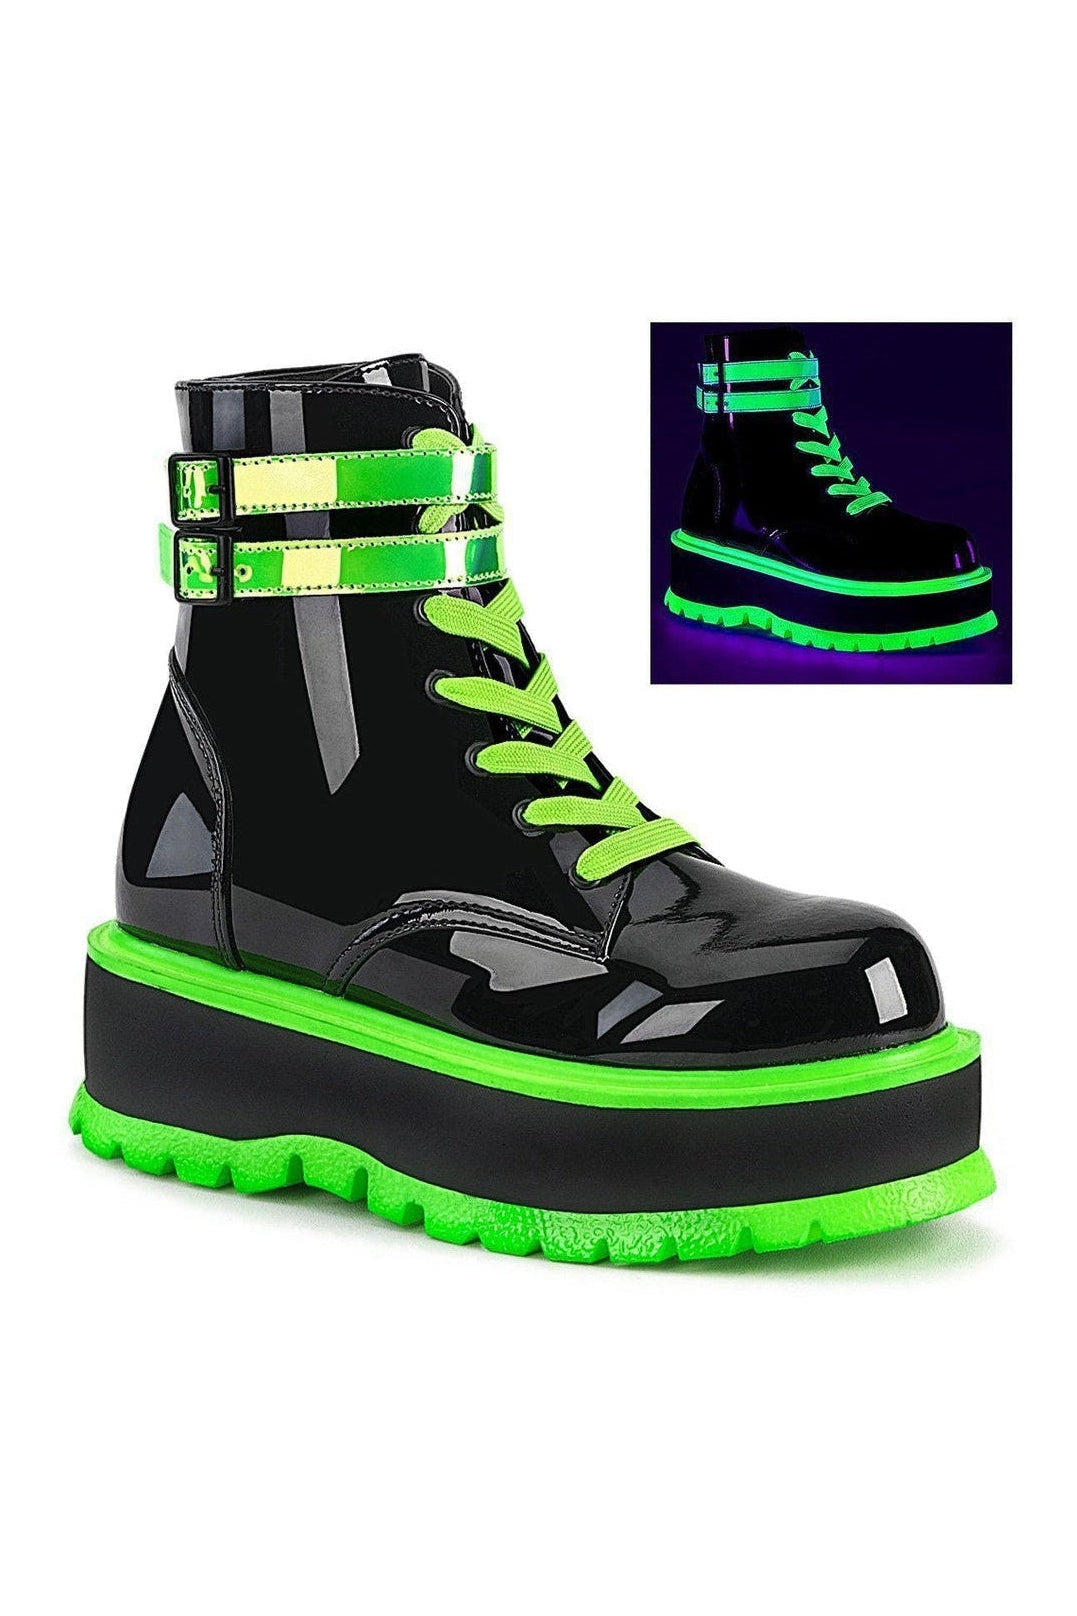 SLACKER-52 Ankle Boot | Black Patent-Ankle Boots-Demonia-SEXYSHOES.COM